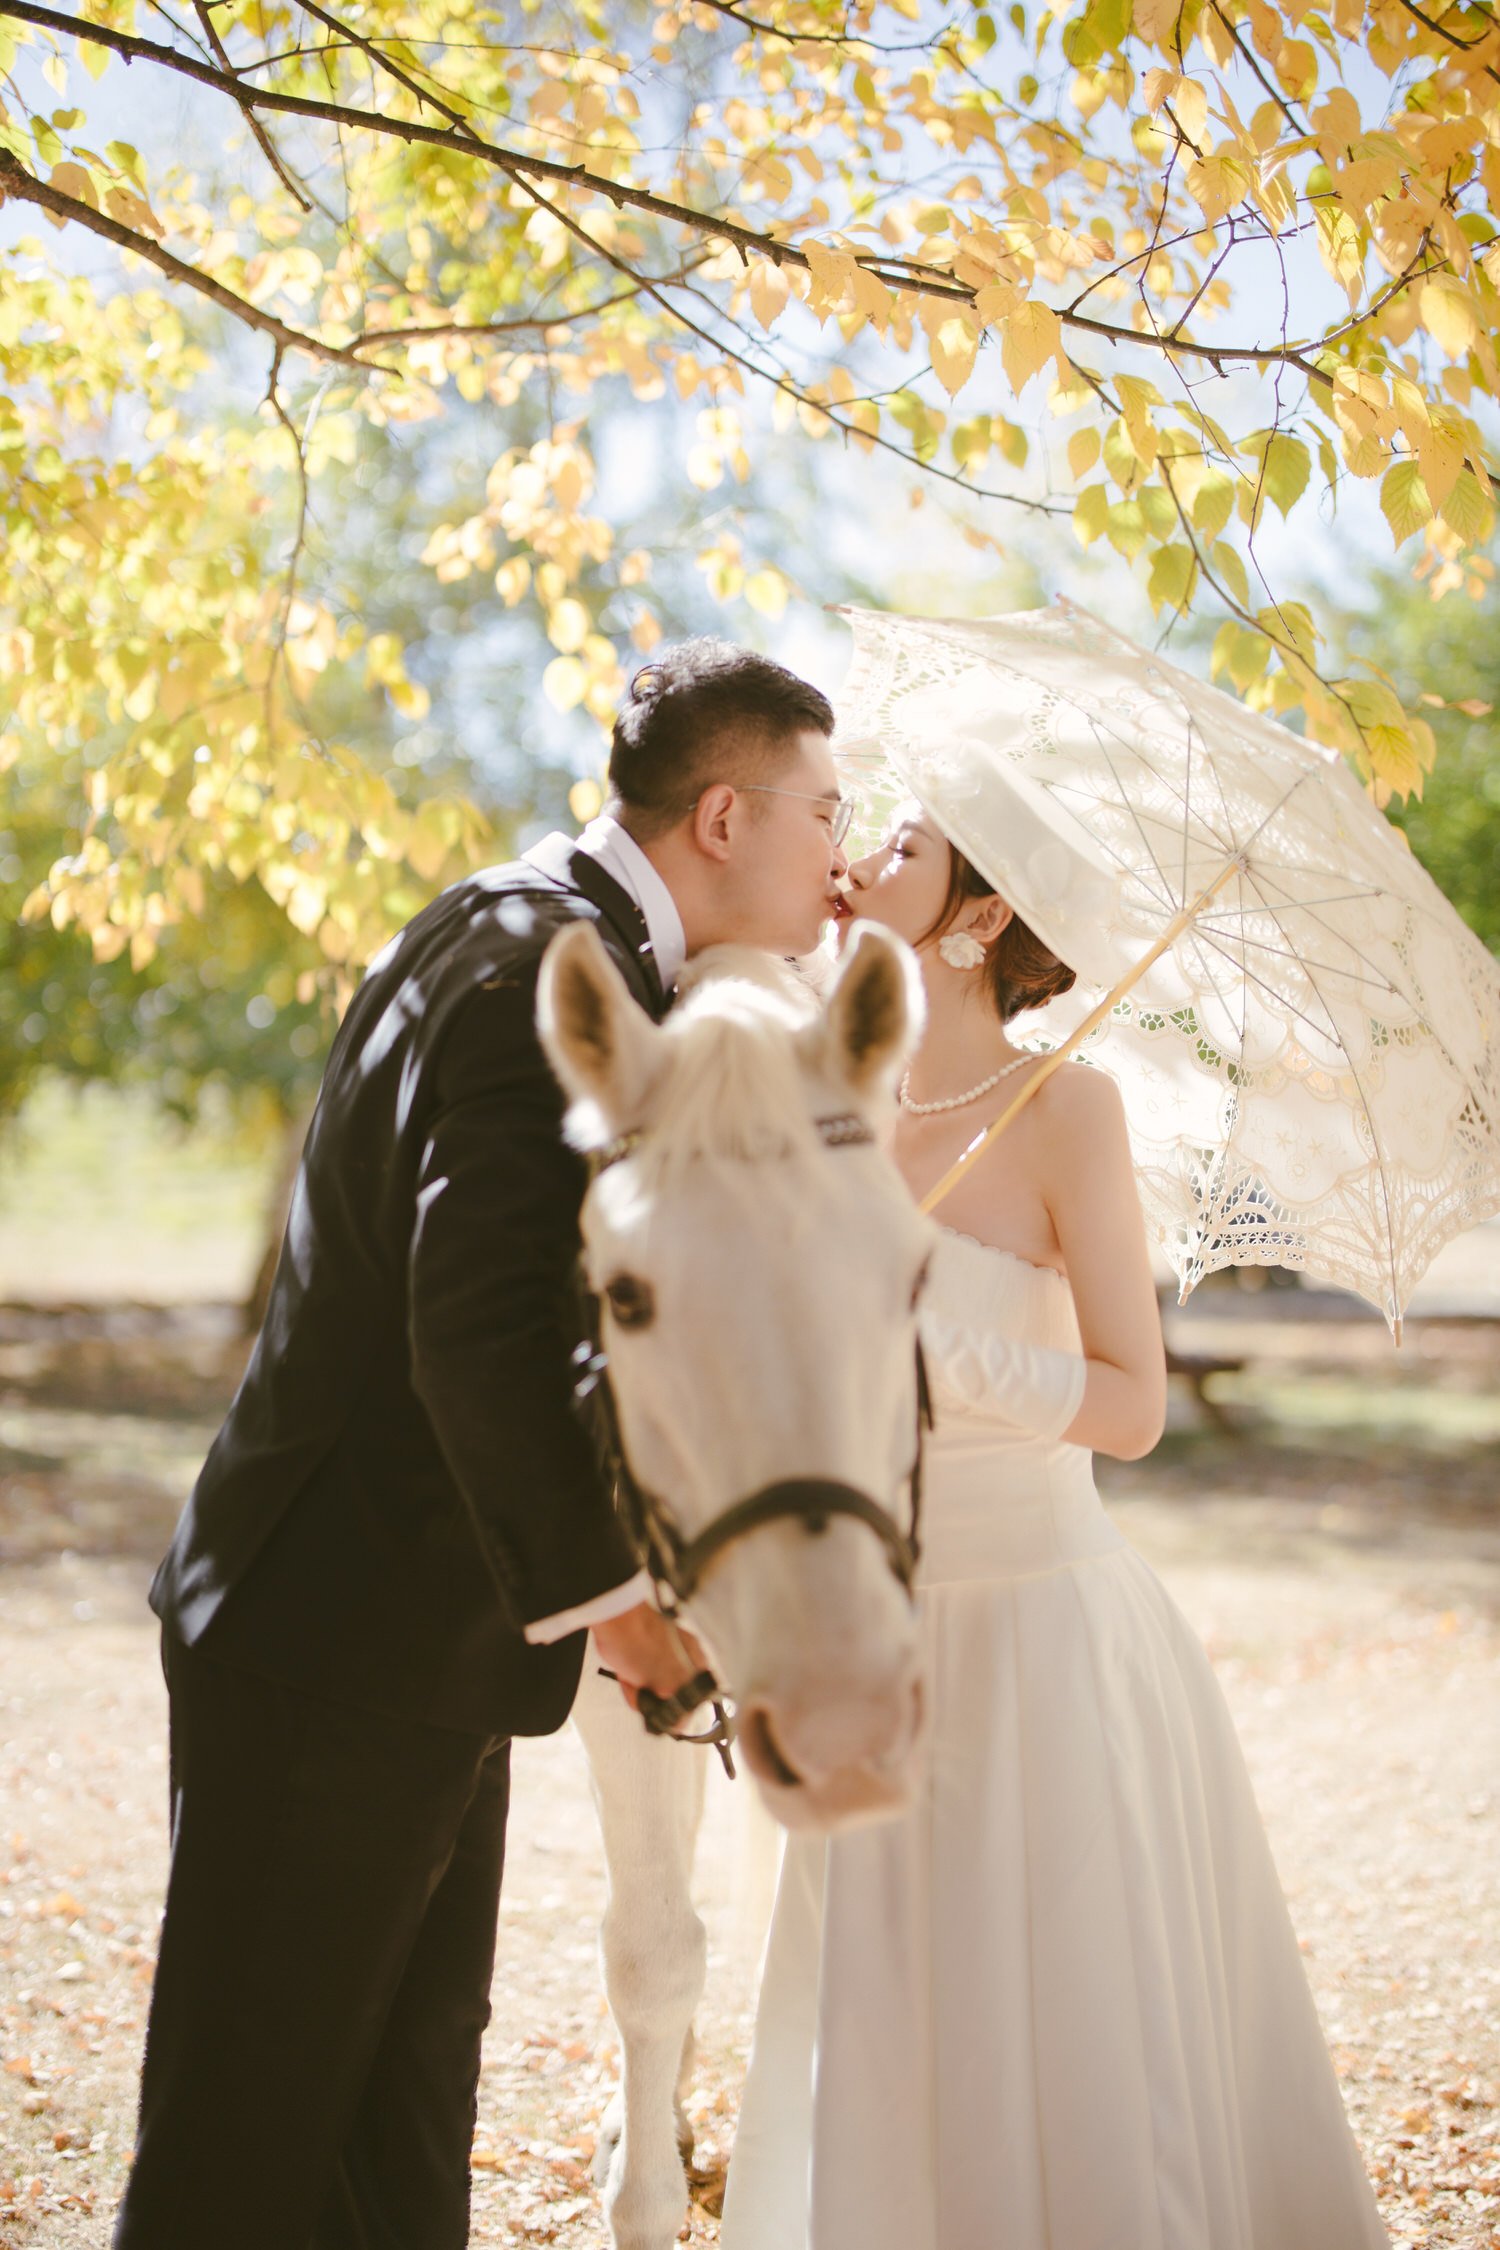 123-11 1 拷贝Ivy & Harry Queenstown photographer Panda Bay Films Wedding Elopement Prewedding Couple .jpg